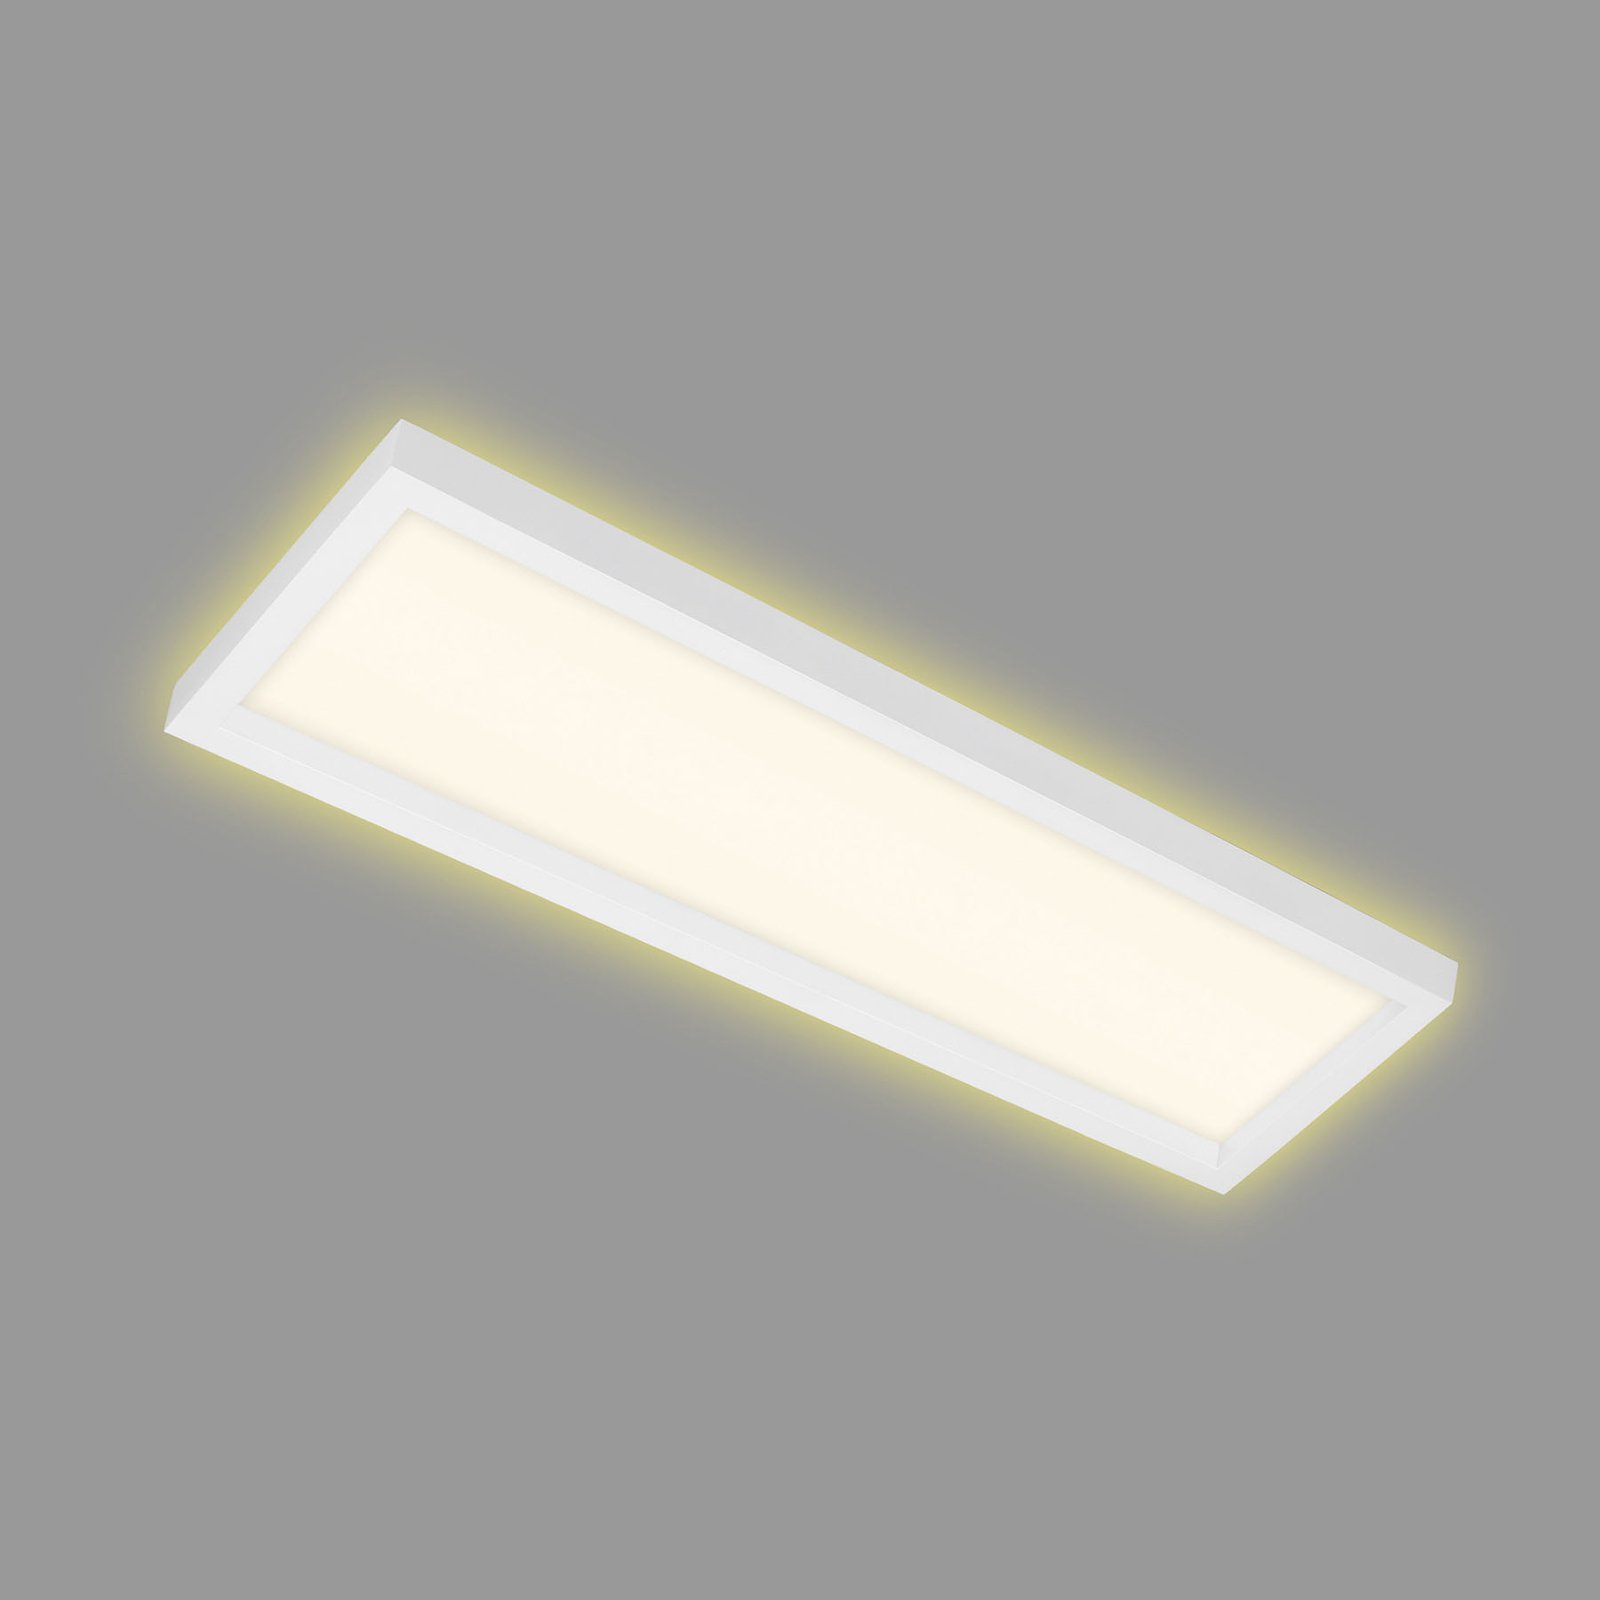 LED plafondlamp 7365, 58 x 20 cm, wit